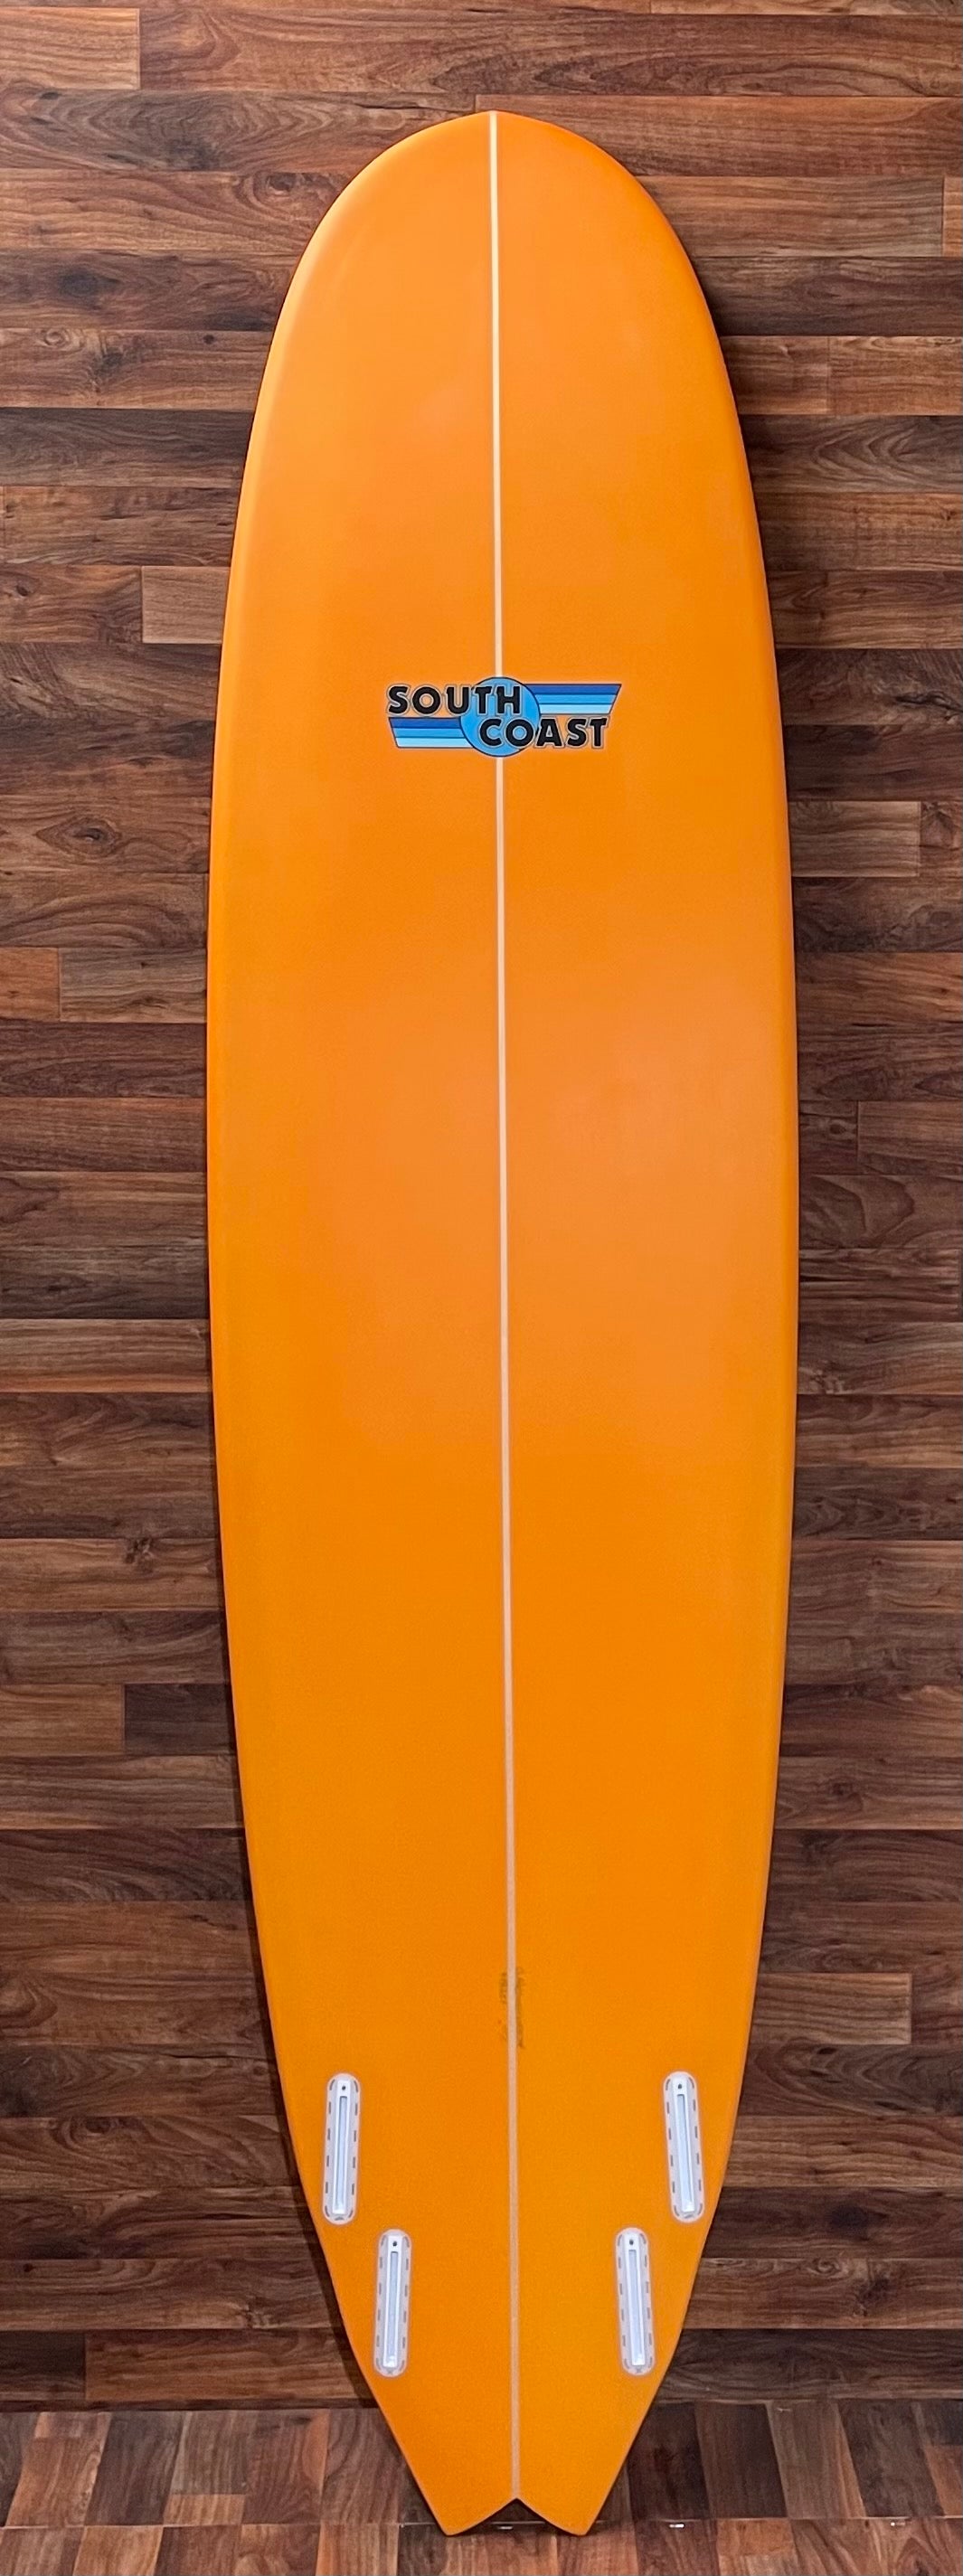 SOUTH COAST REJUVENATOR 7'10” SURFBOARD